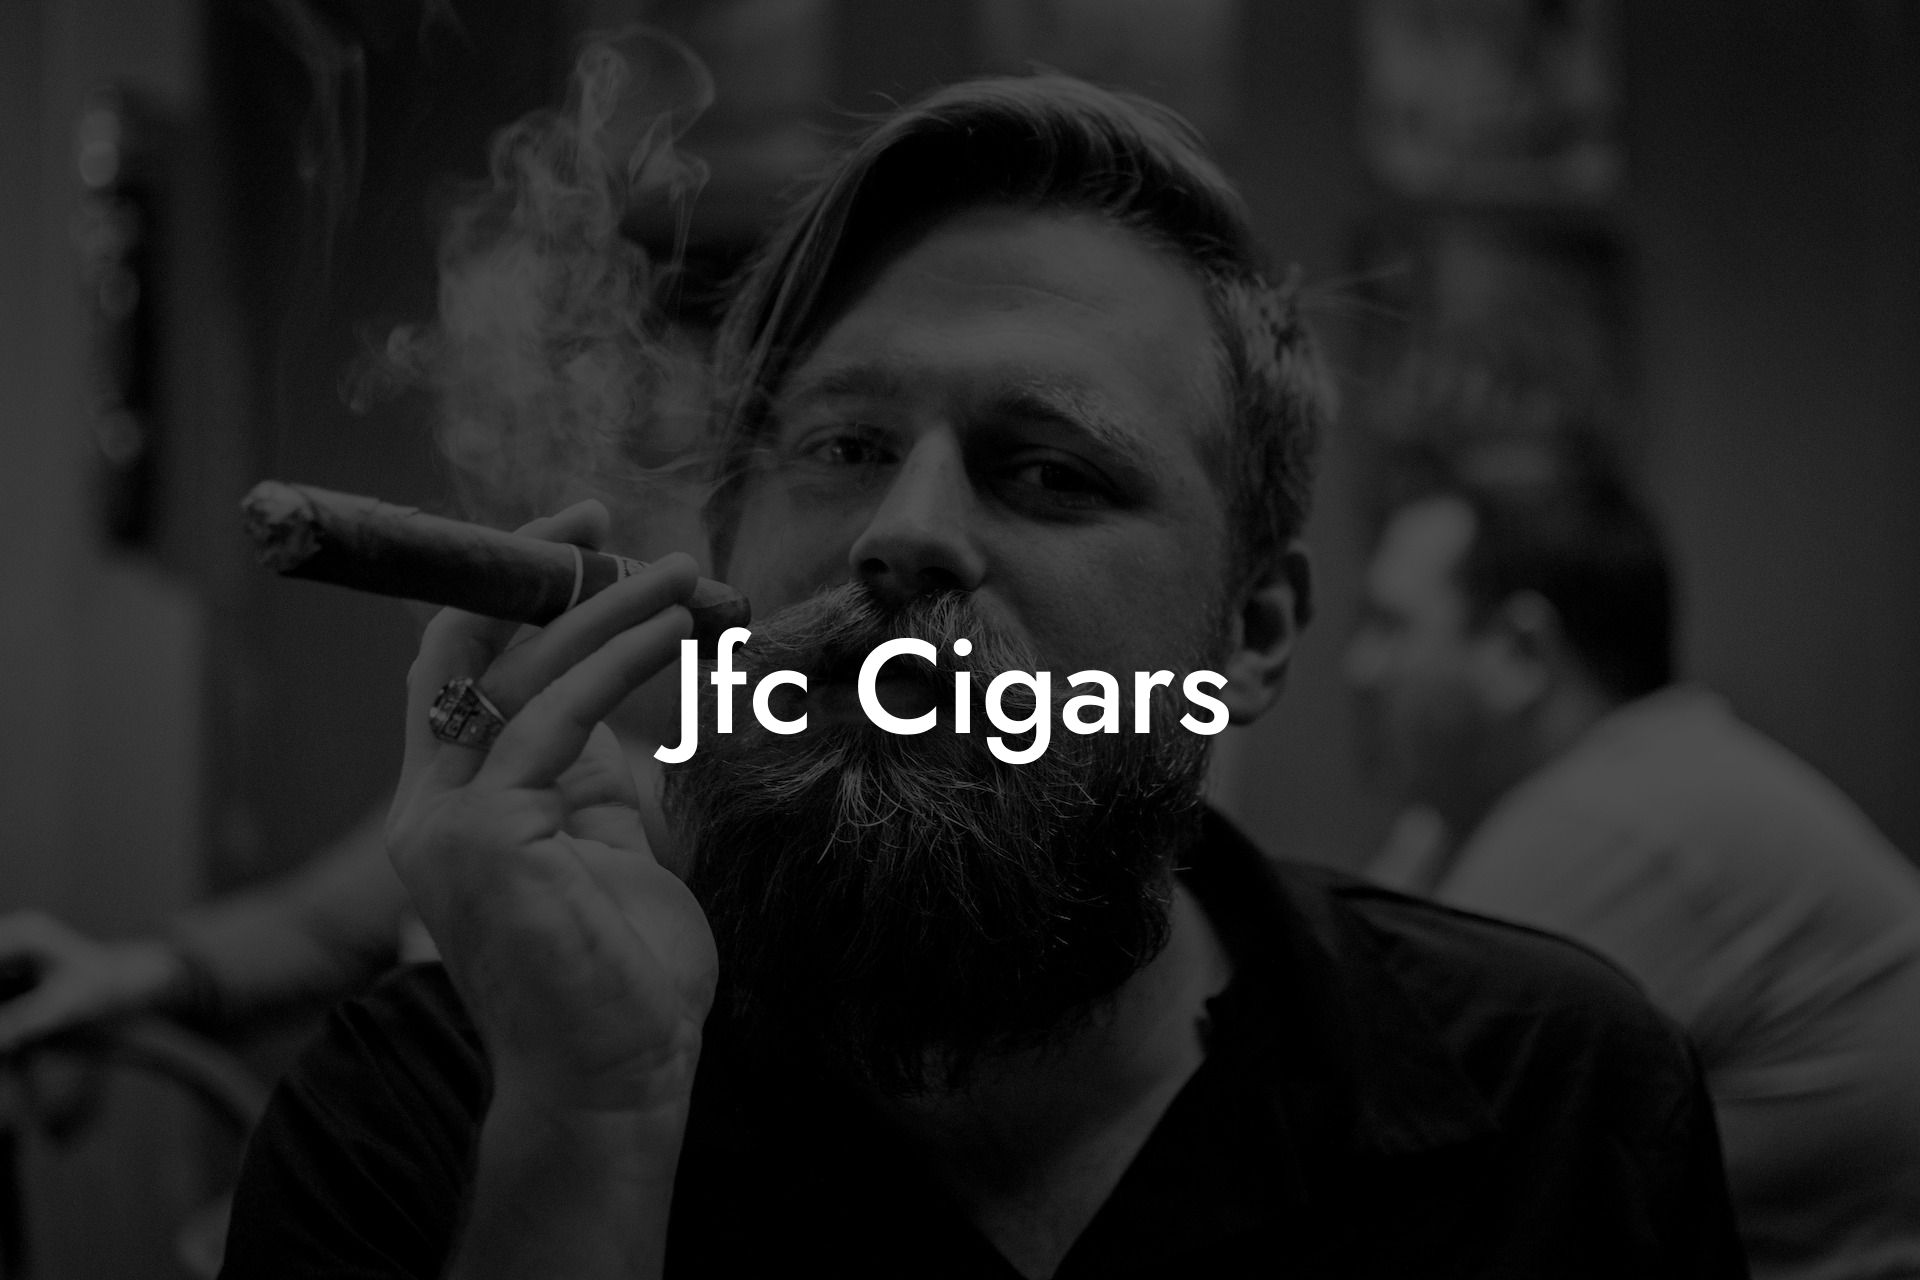 Jfc Cigars